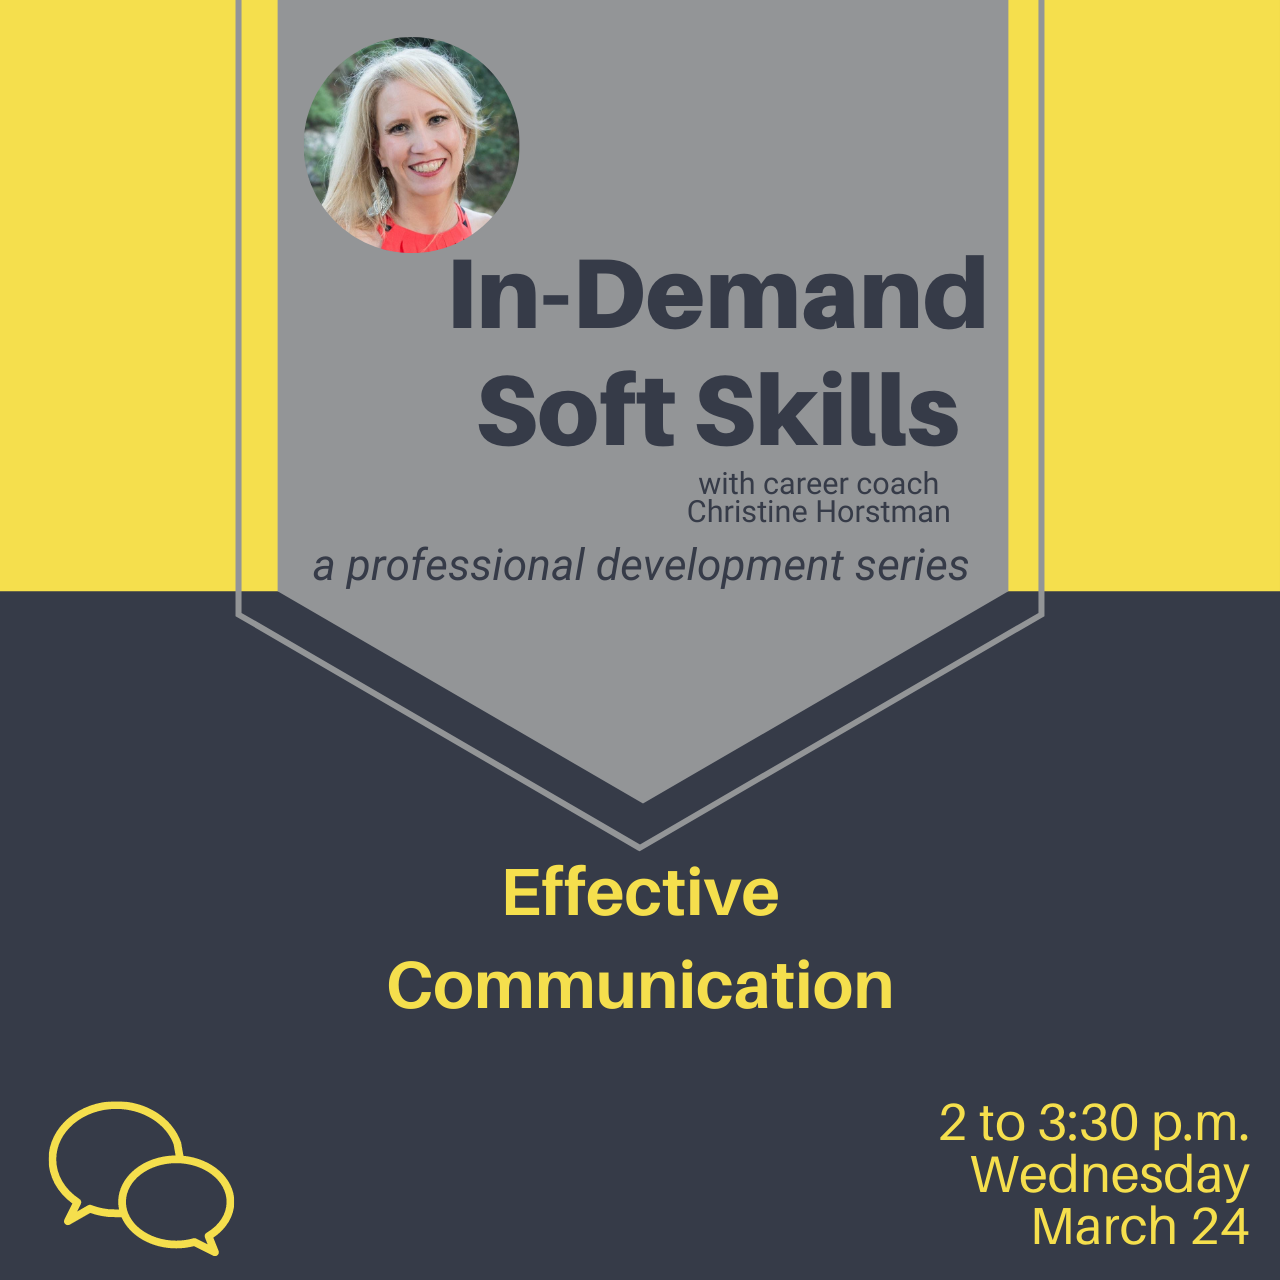 In-Demand Soft Skills: Effective Communication